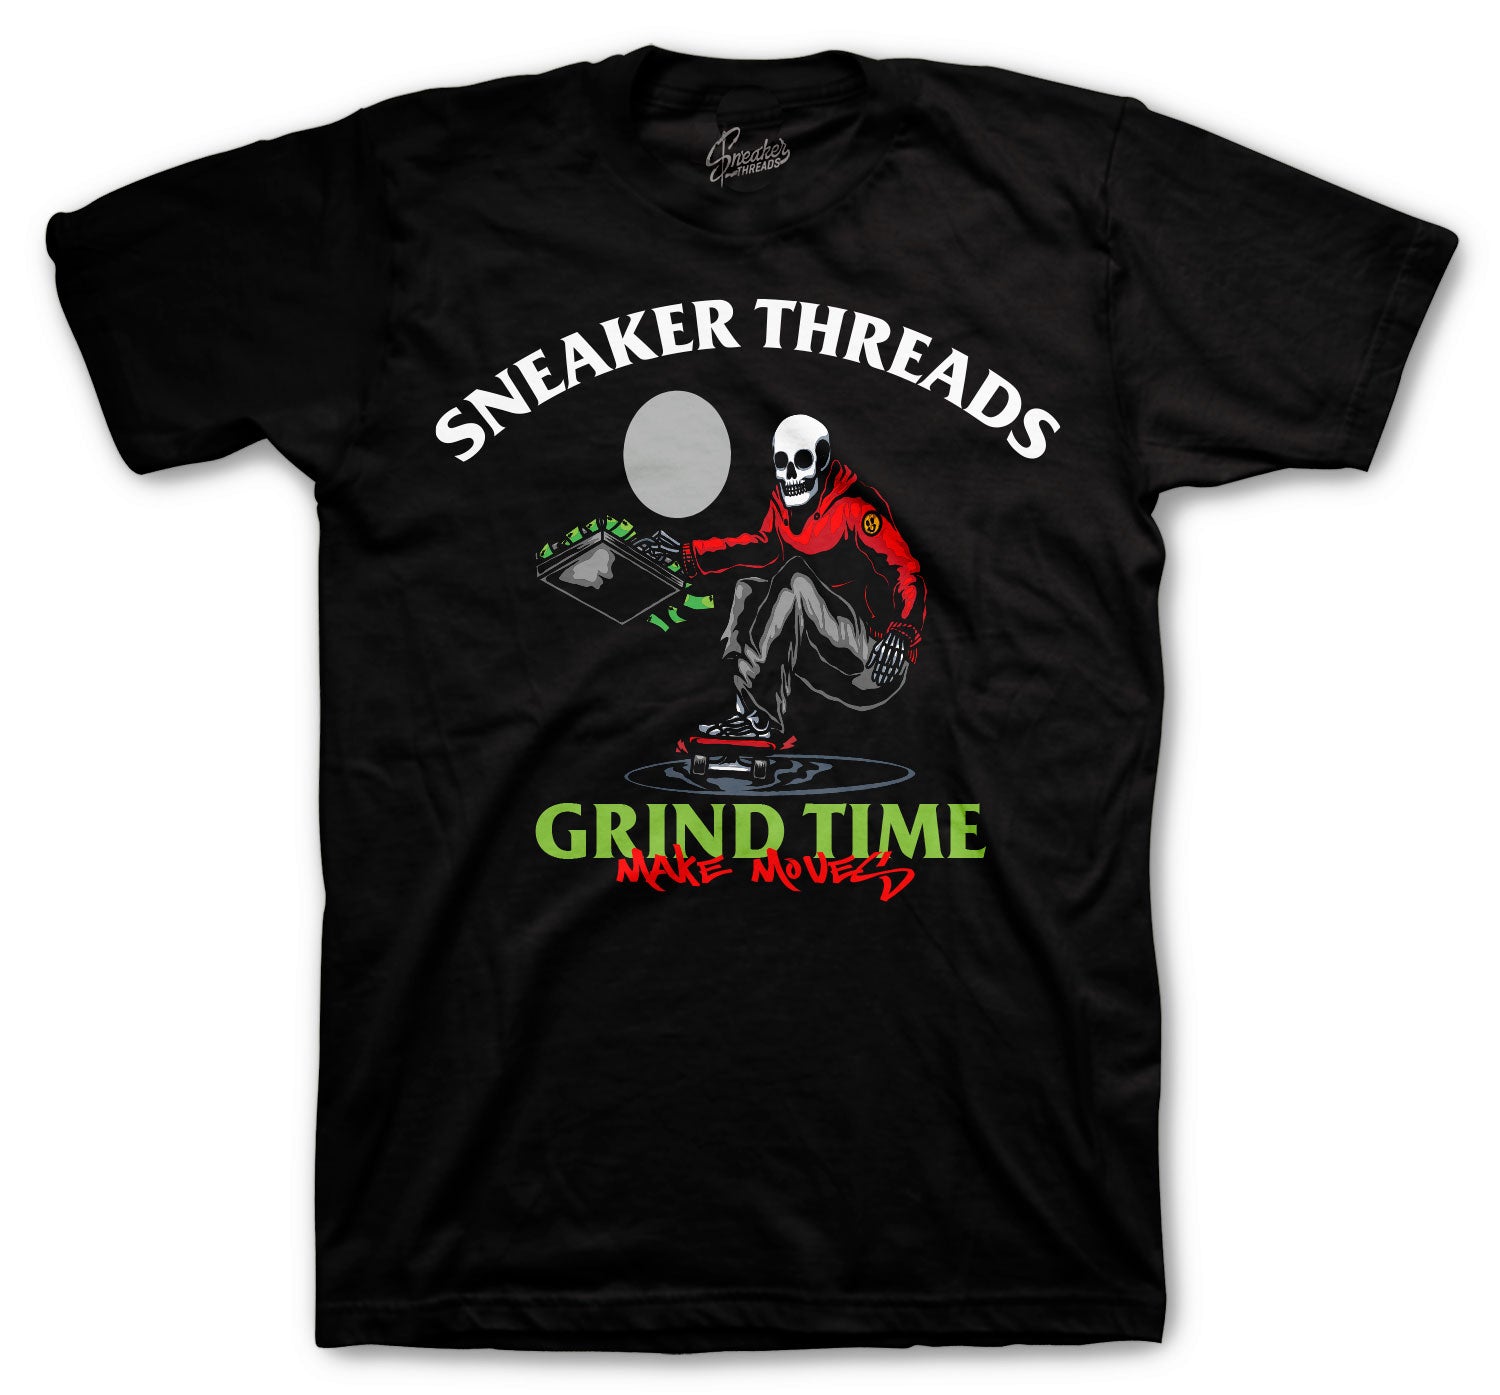 Dunk SB Strawberry Shirt - Grind Time - Black